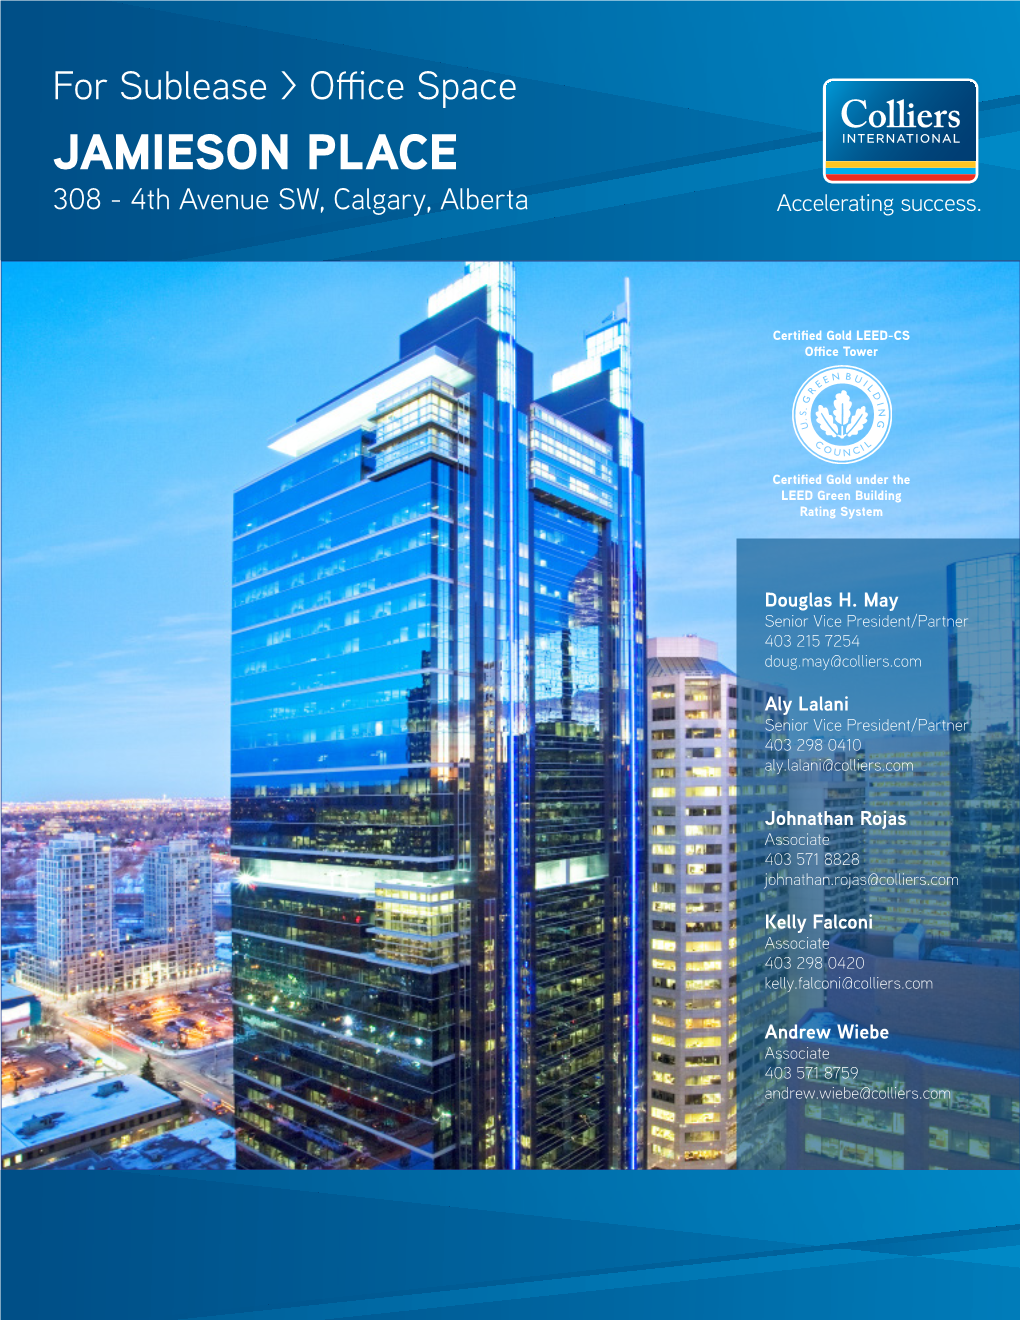 JAMIESON PLACE 308 - 4Th Avenue SW, Calgary, Alberta Accelerating Success